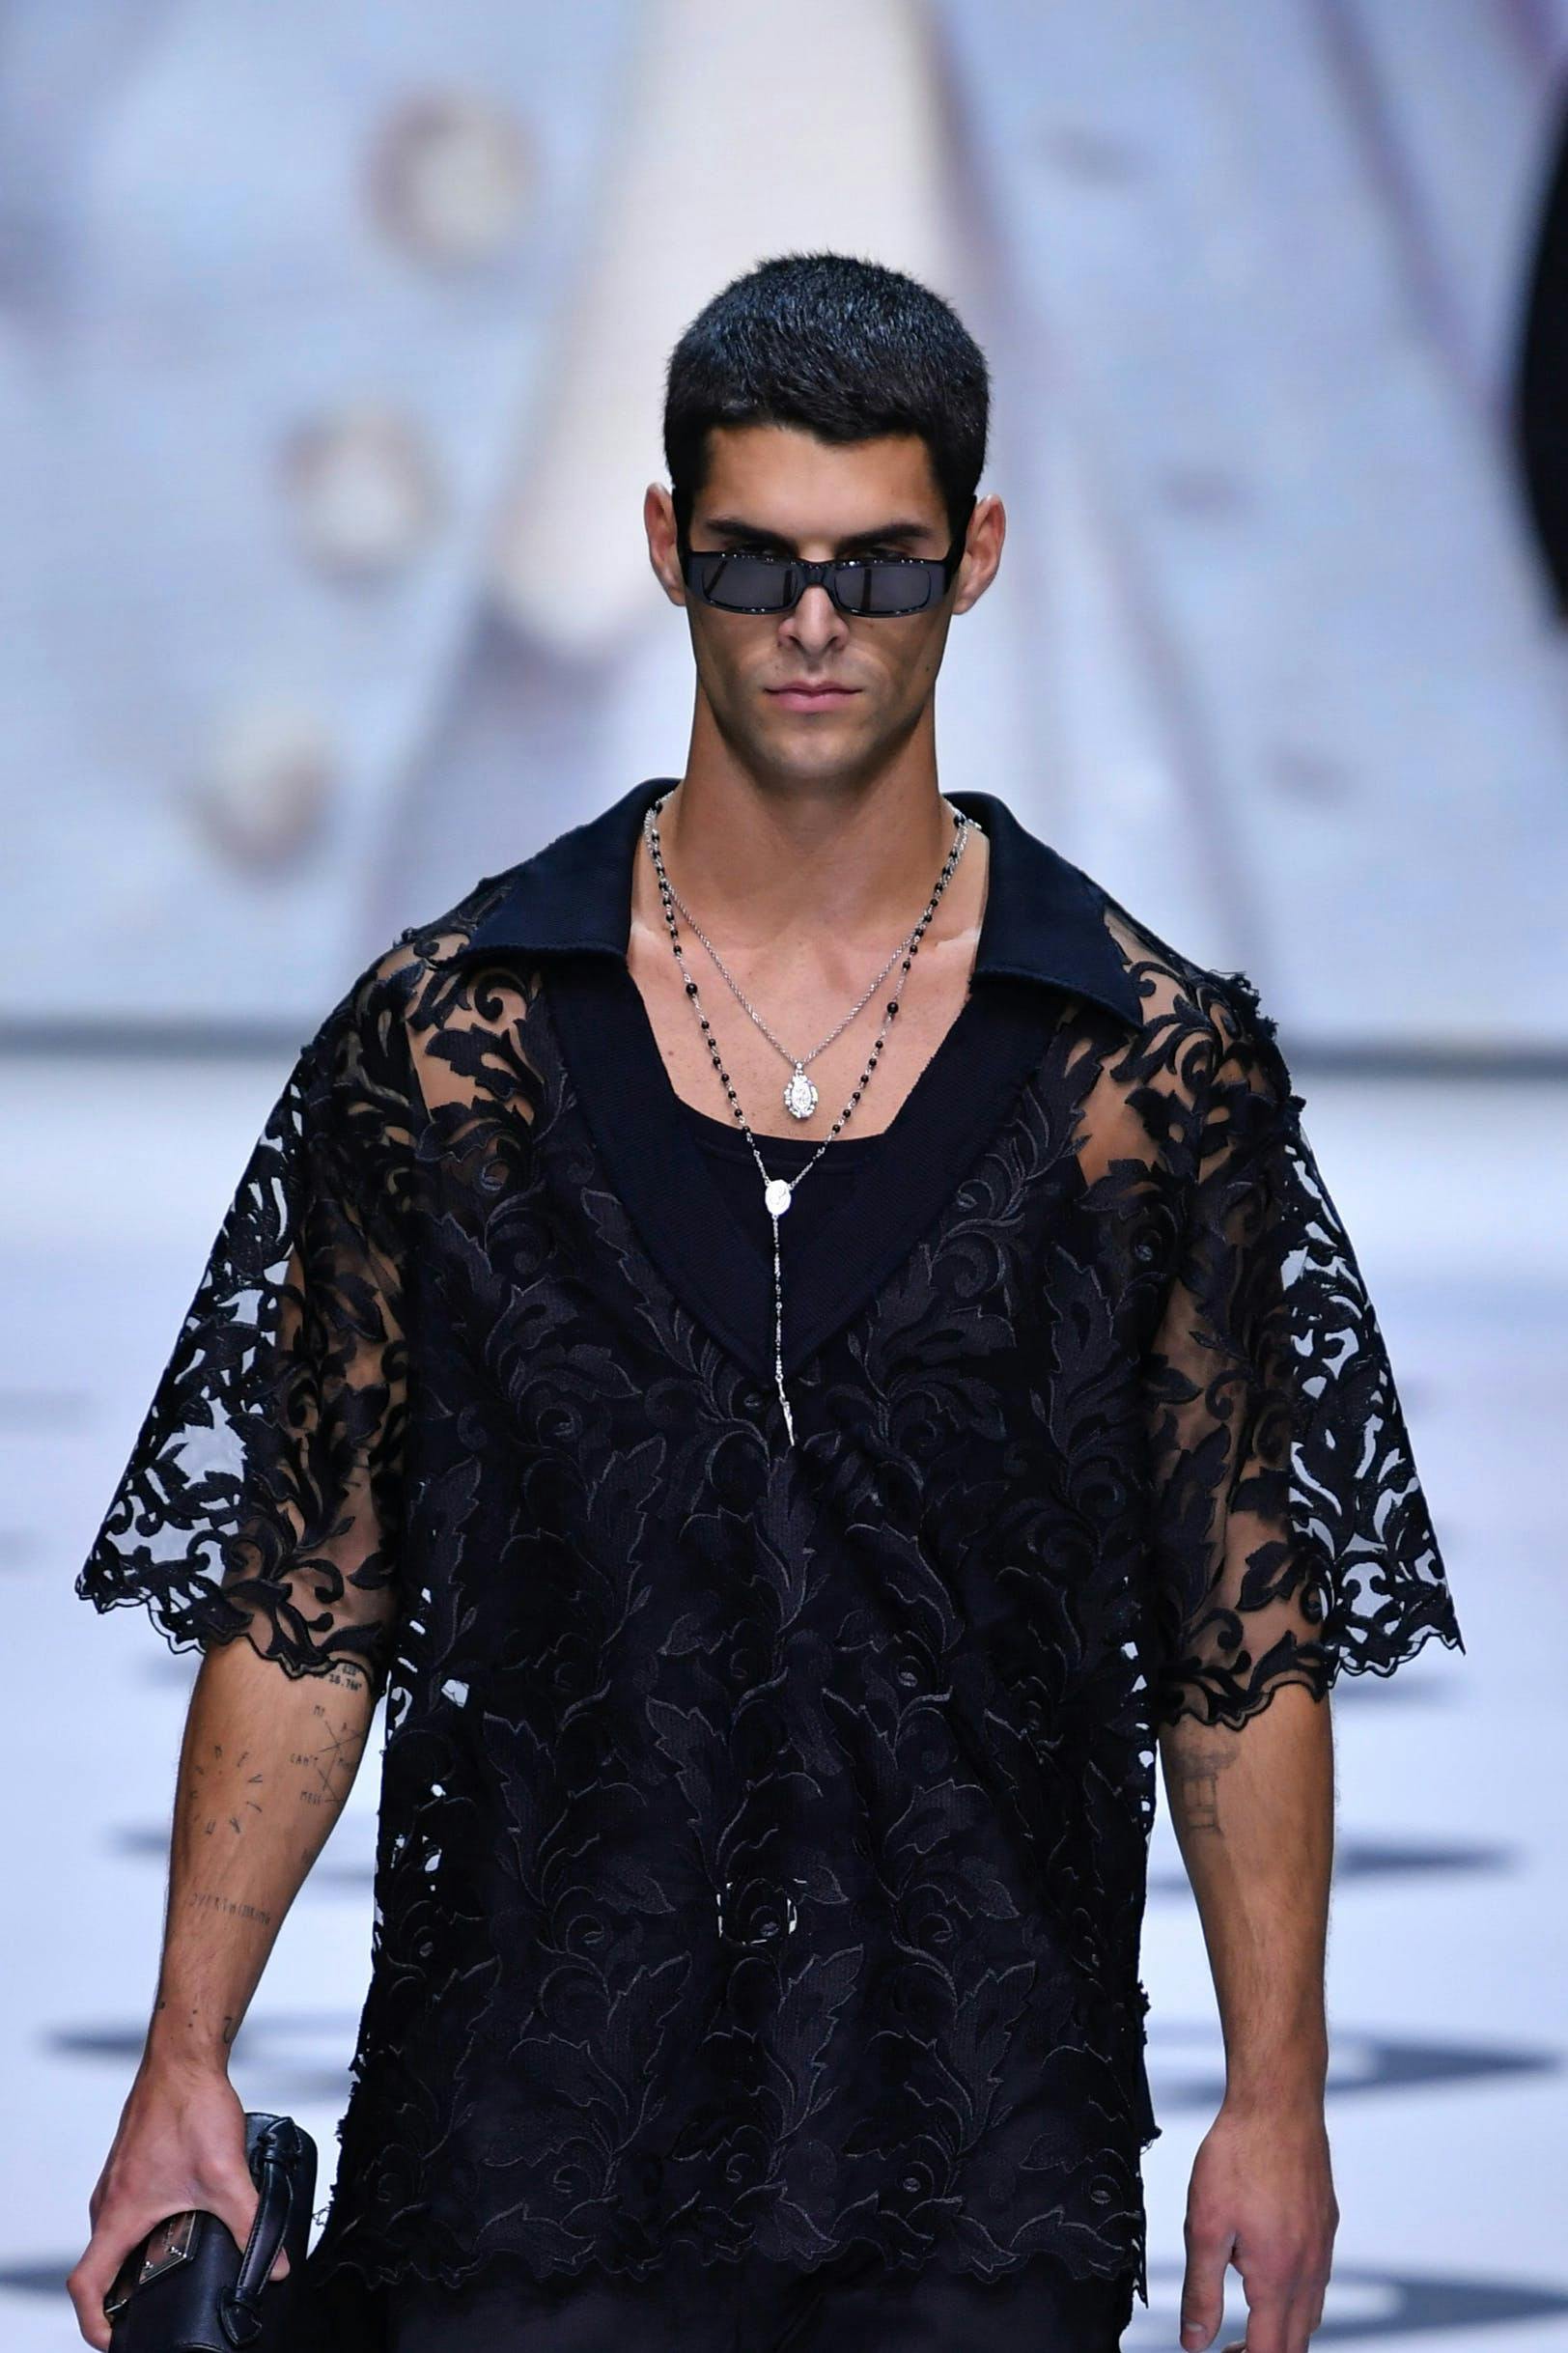 fashion black hair person adult male man sleeve necklace handbag glasses